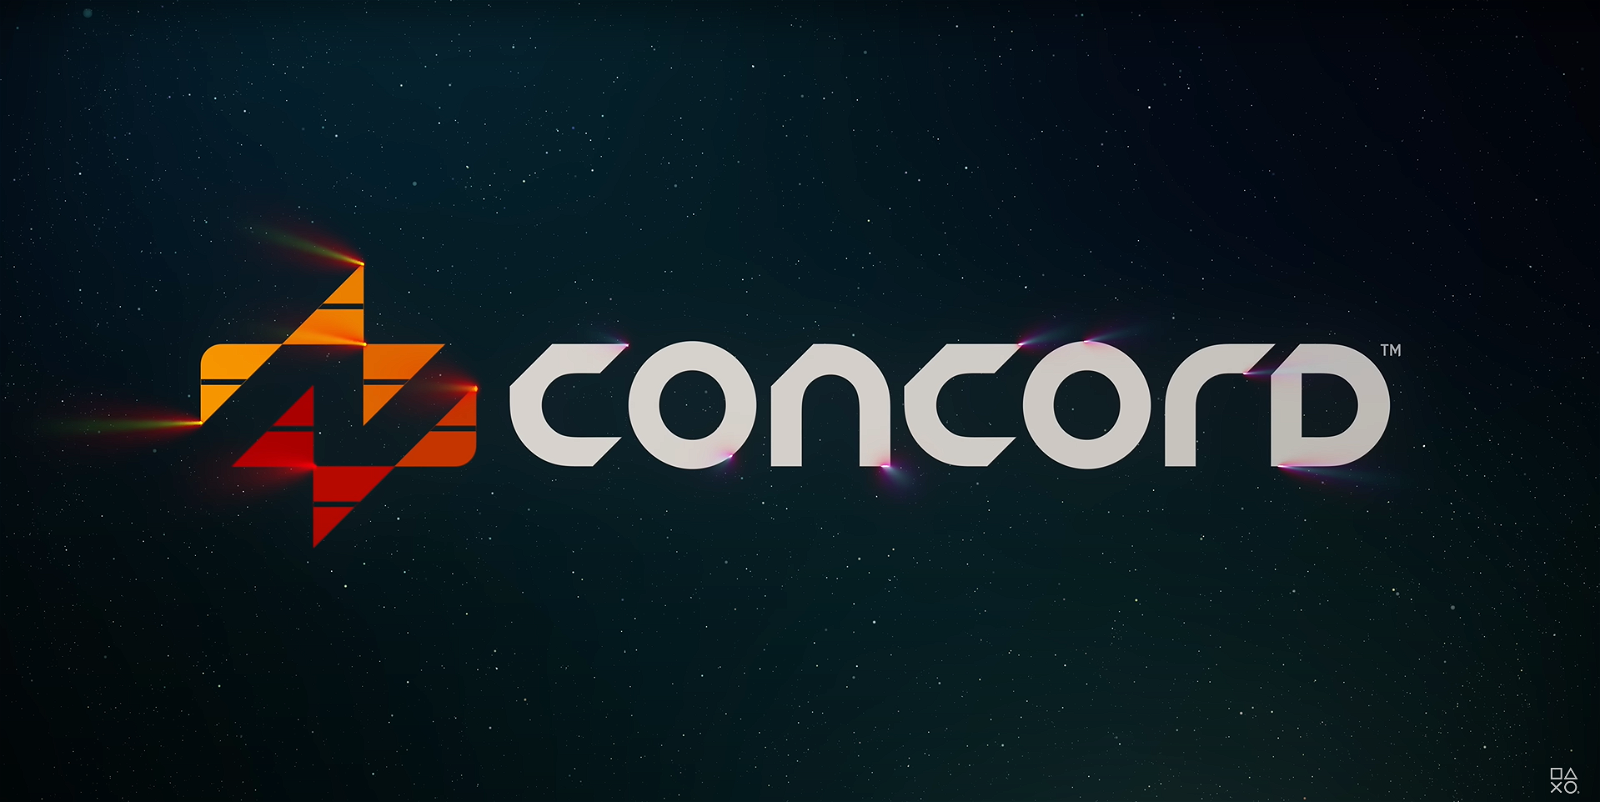 Concord's reveal trailer